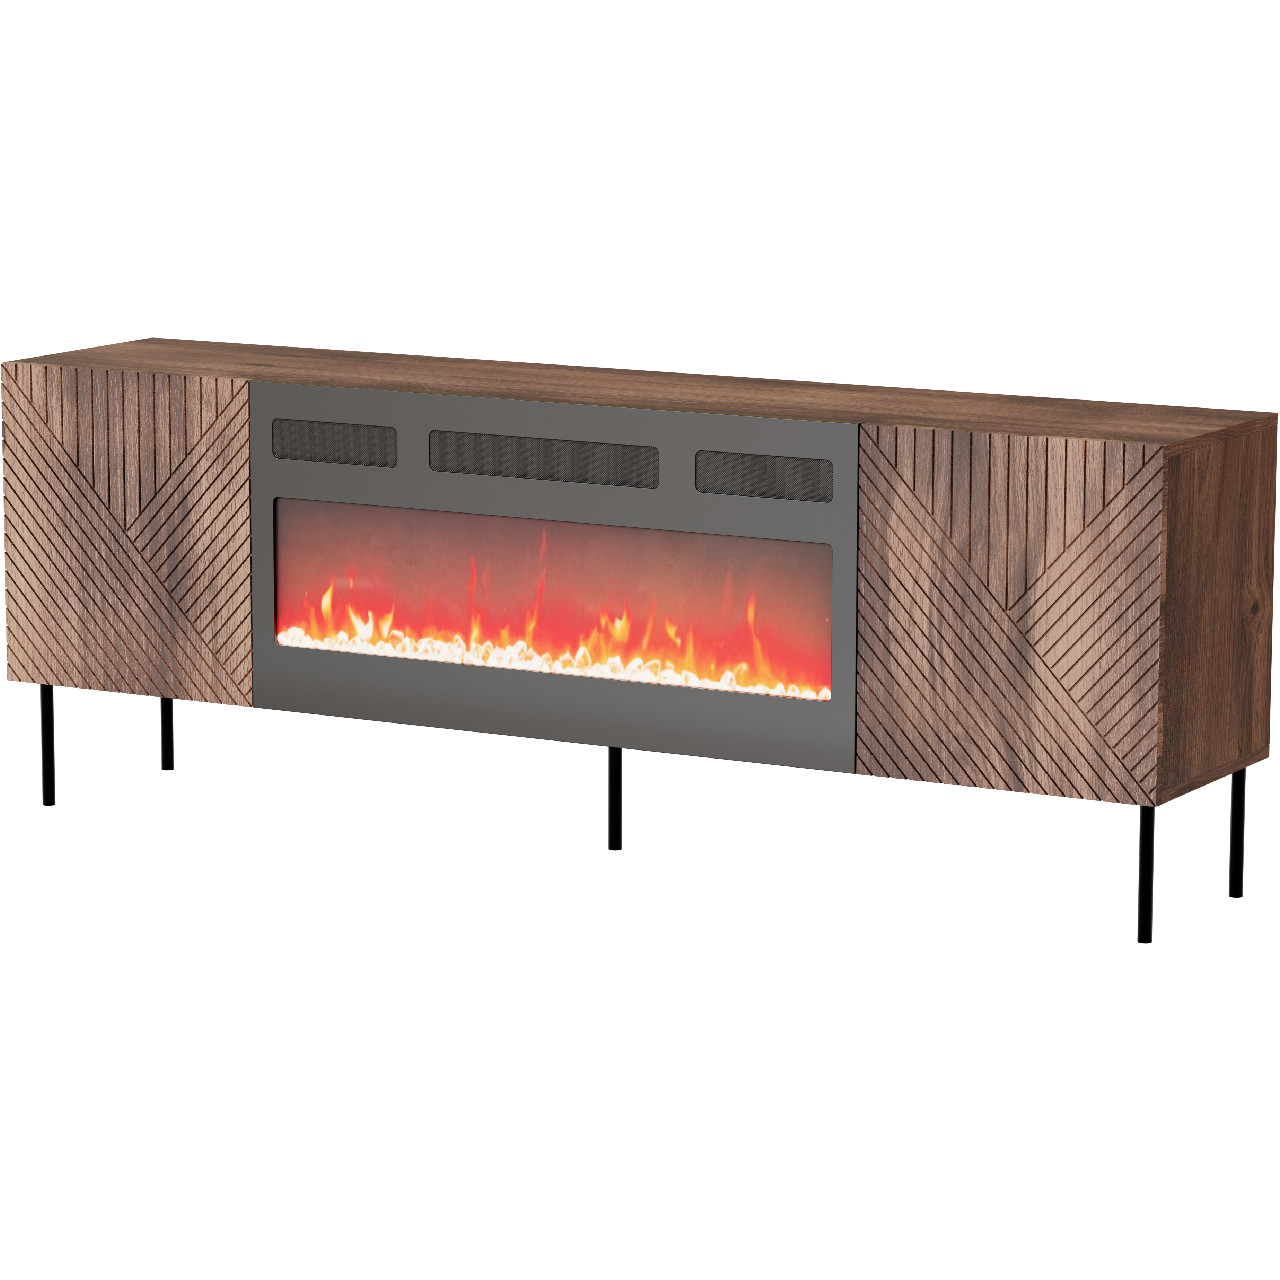 TV cabinet ART DECO 190 with electric fireplace warmia walnut